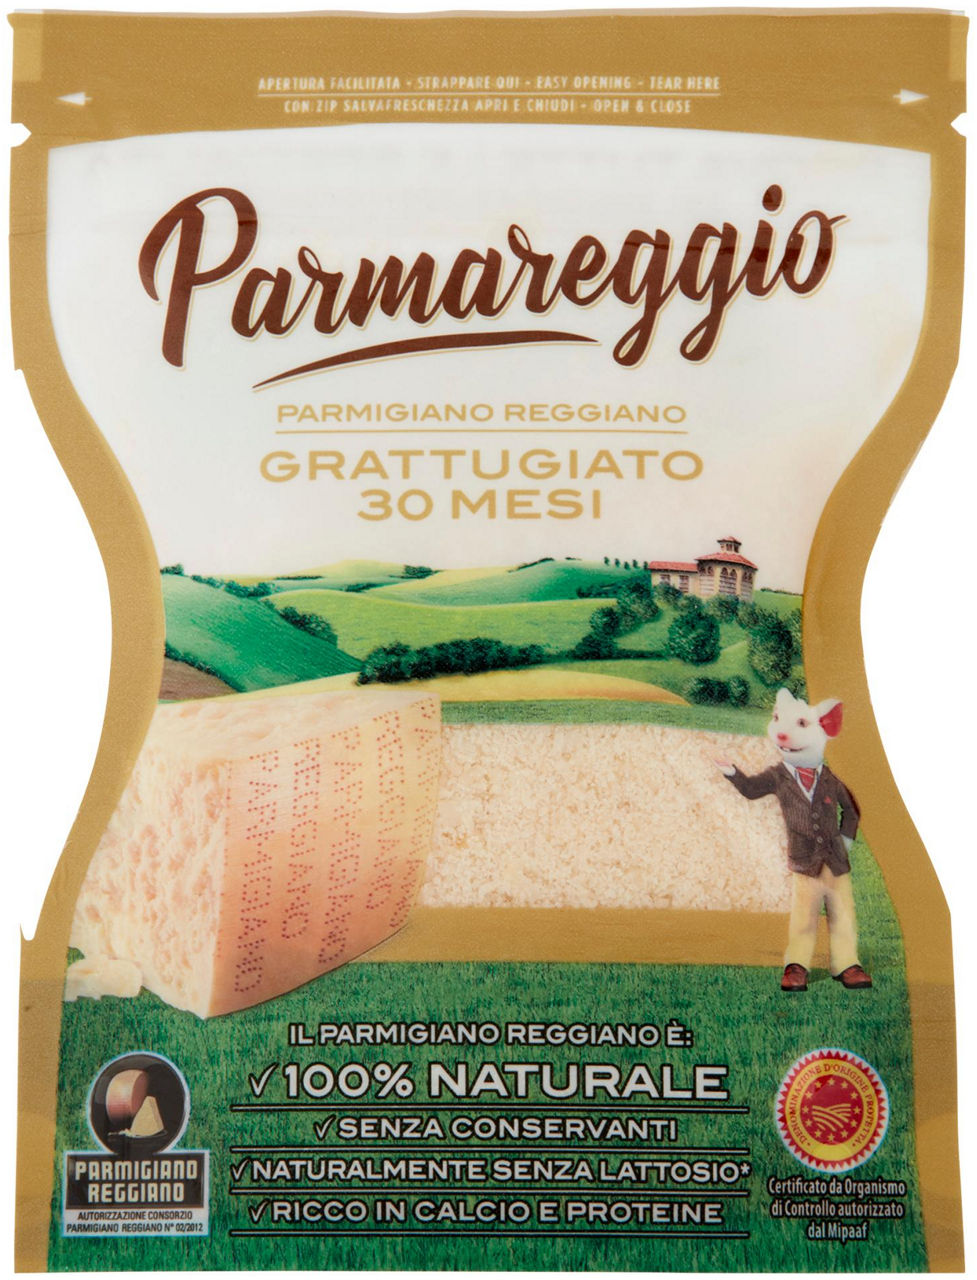 Parmigiano reggiano dop grattugiato 30 mesi parmareggio bs 60g